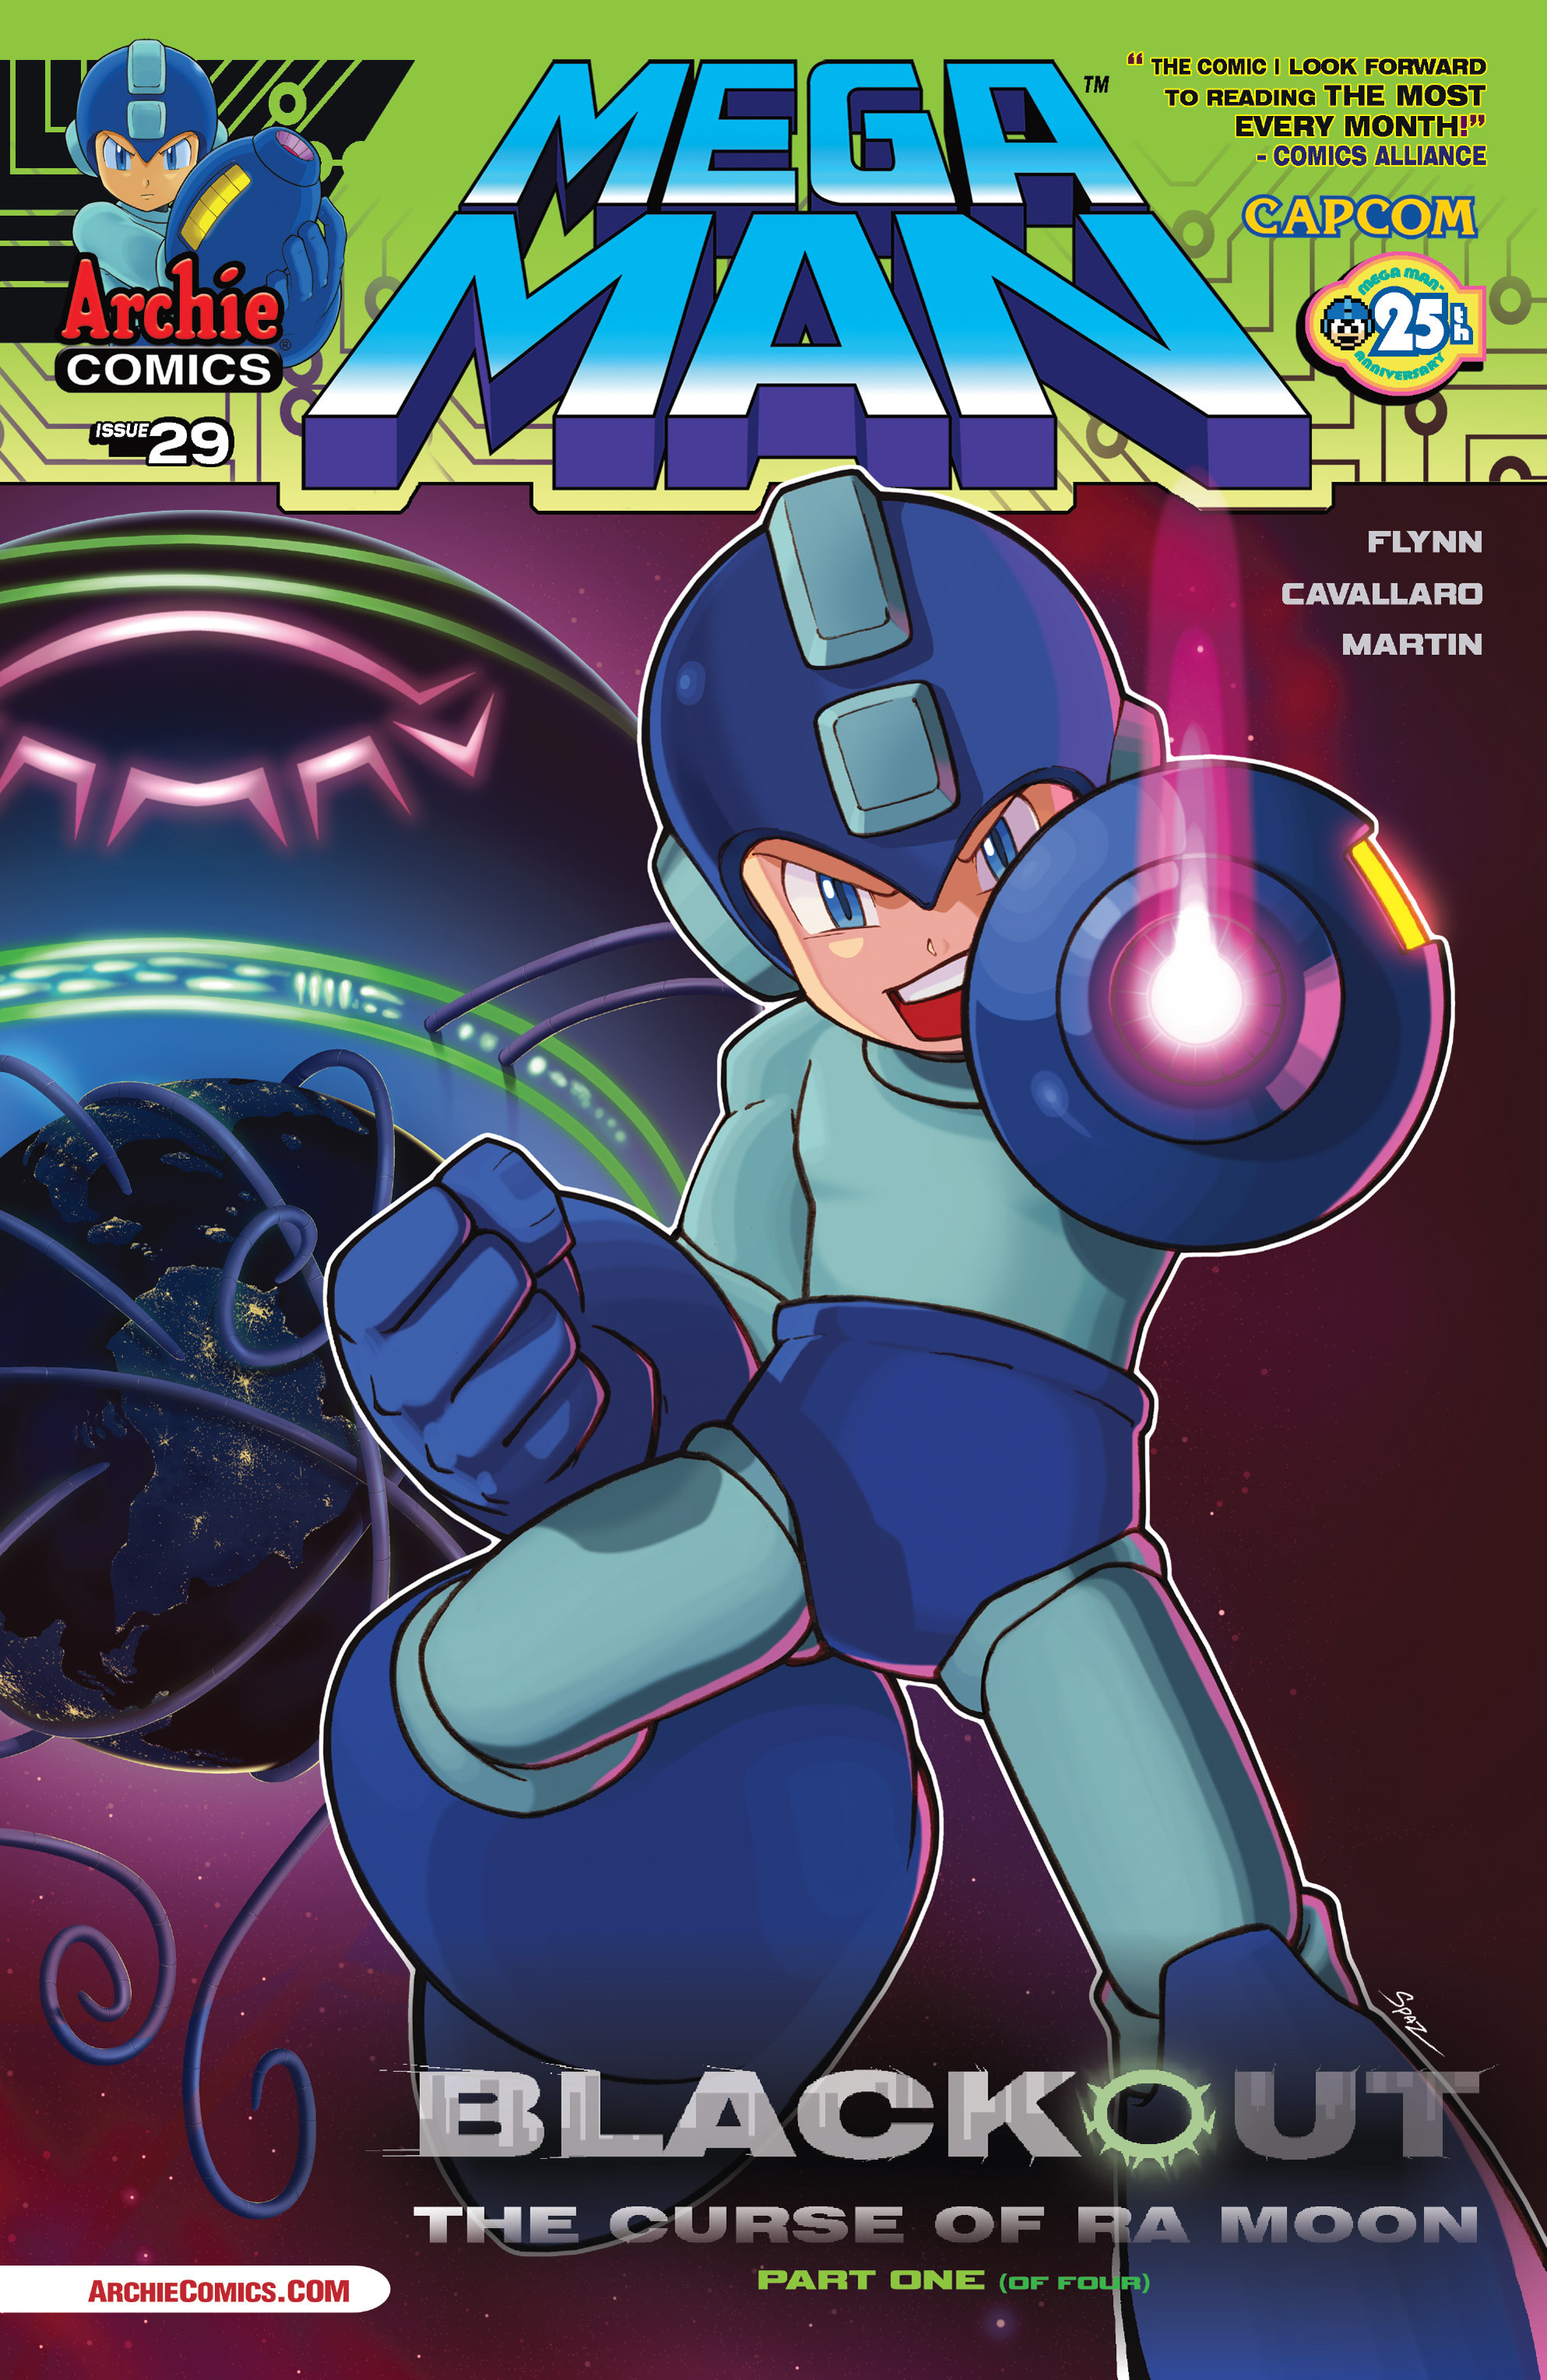 Mega Man Issue 29 (Archie Comics) | MMKB | Fandom powered ...